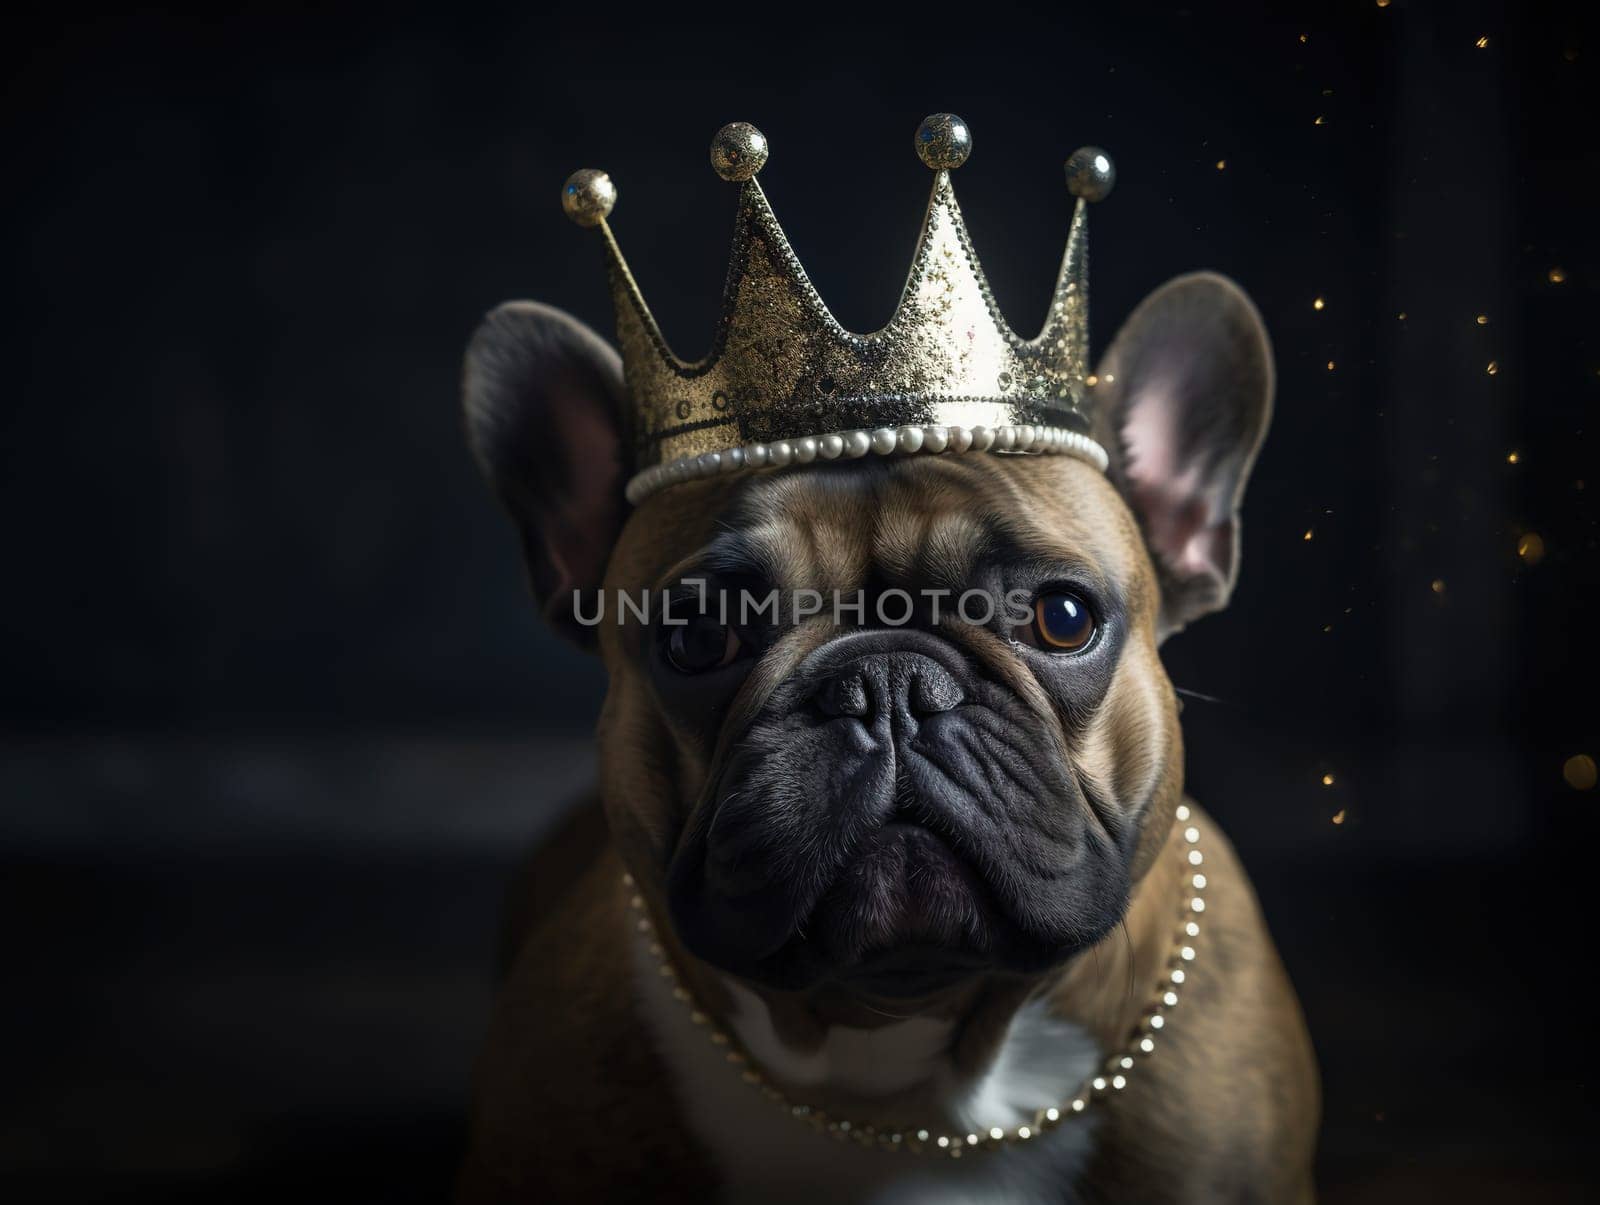 Dog In Carnival Crown Sits On Blurred Background Of Living Room by GekaSkr